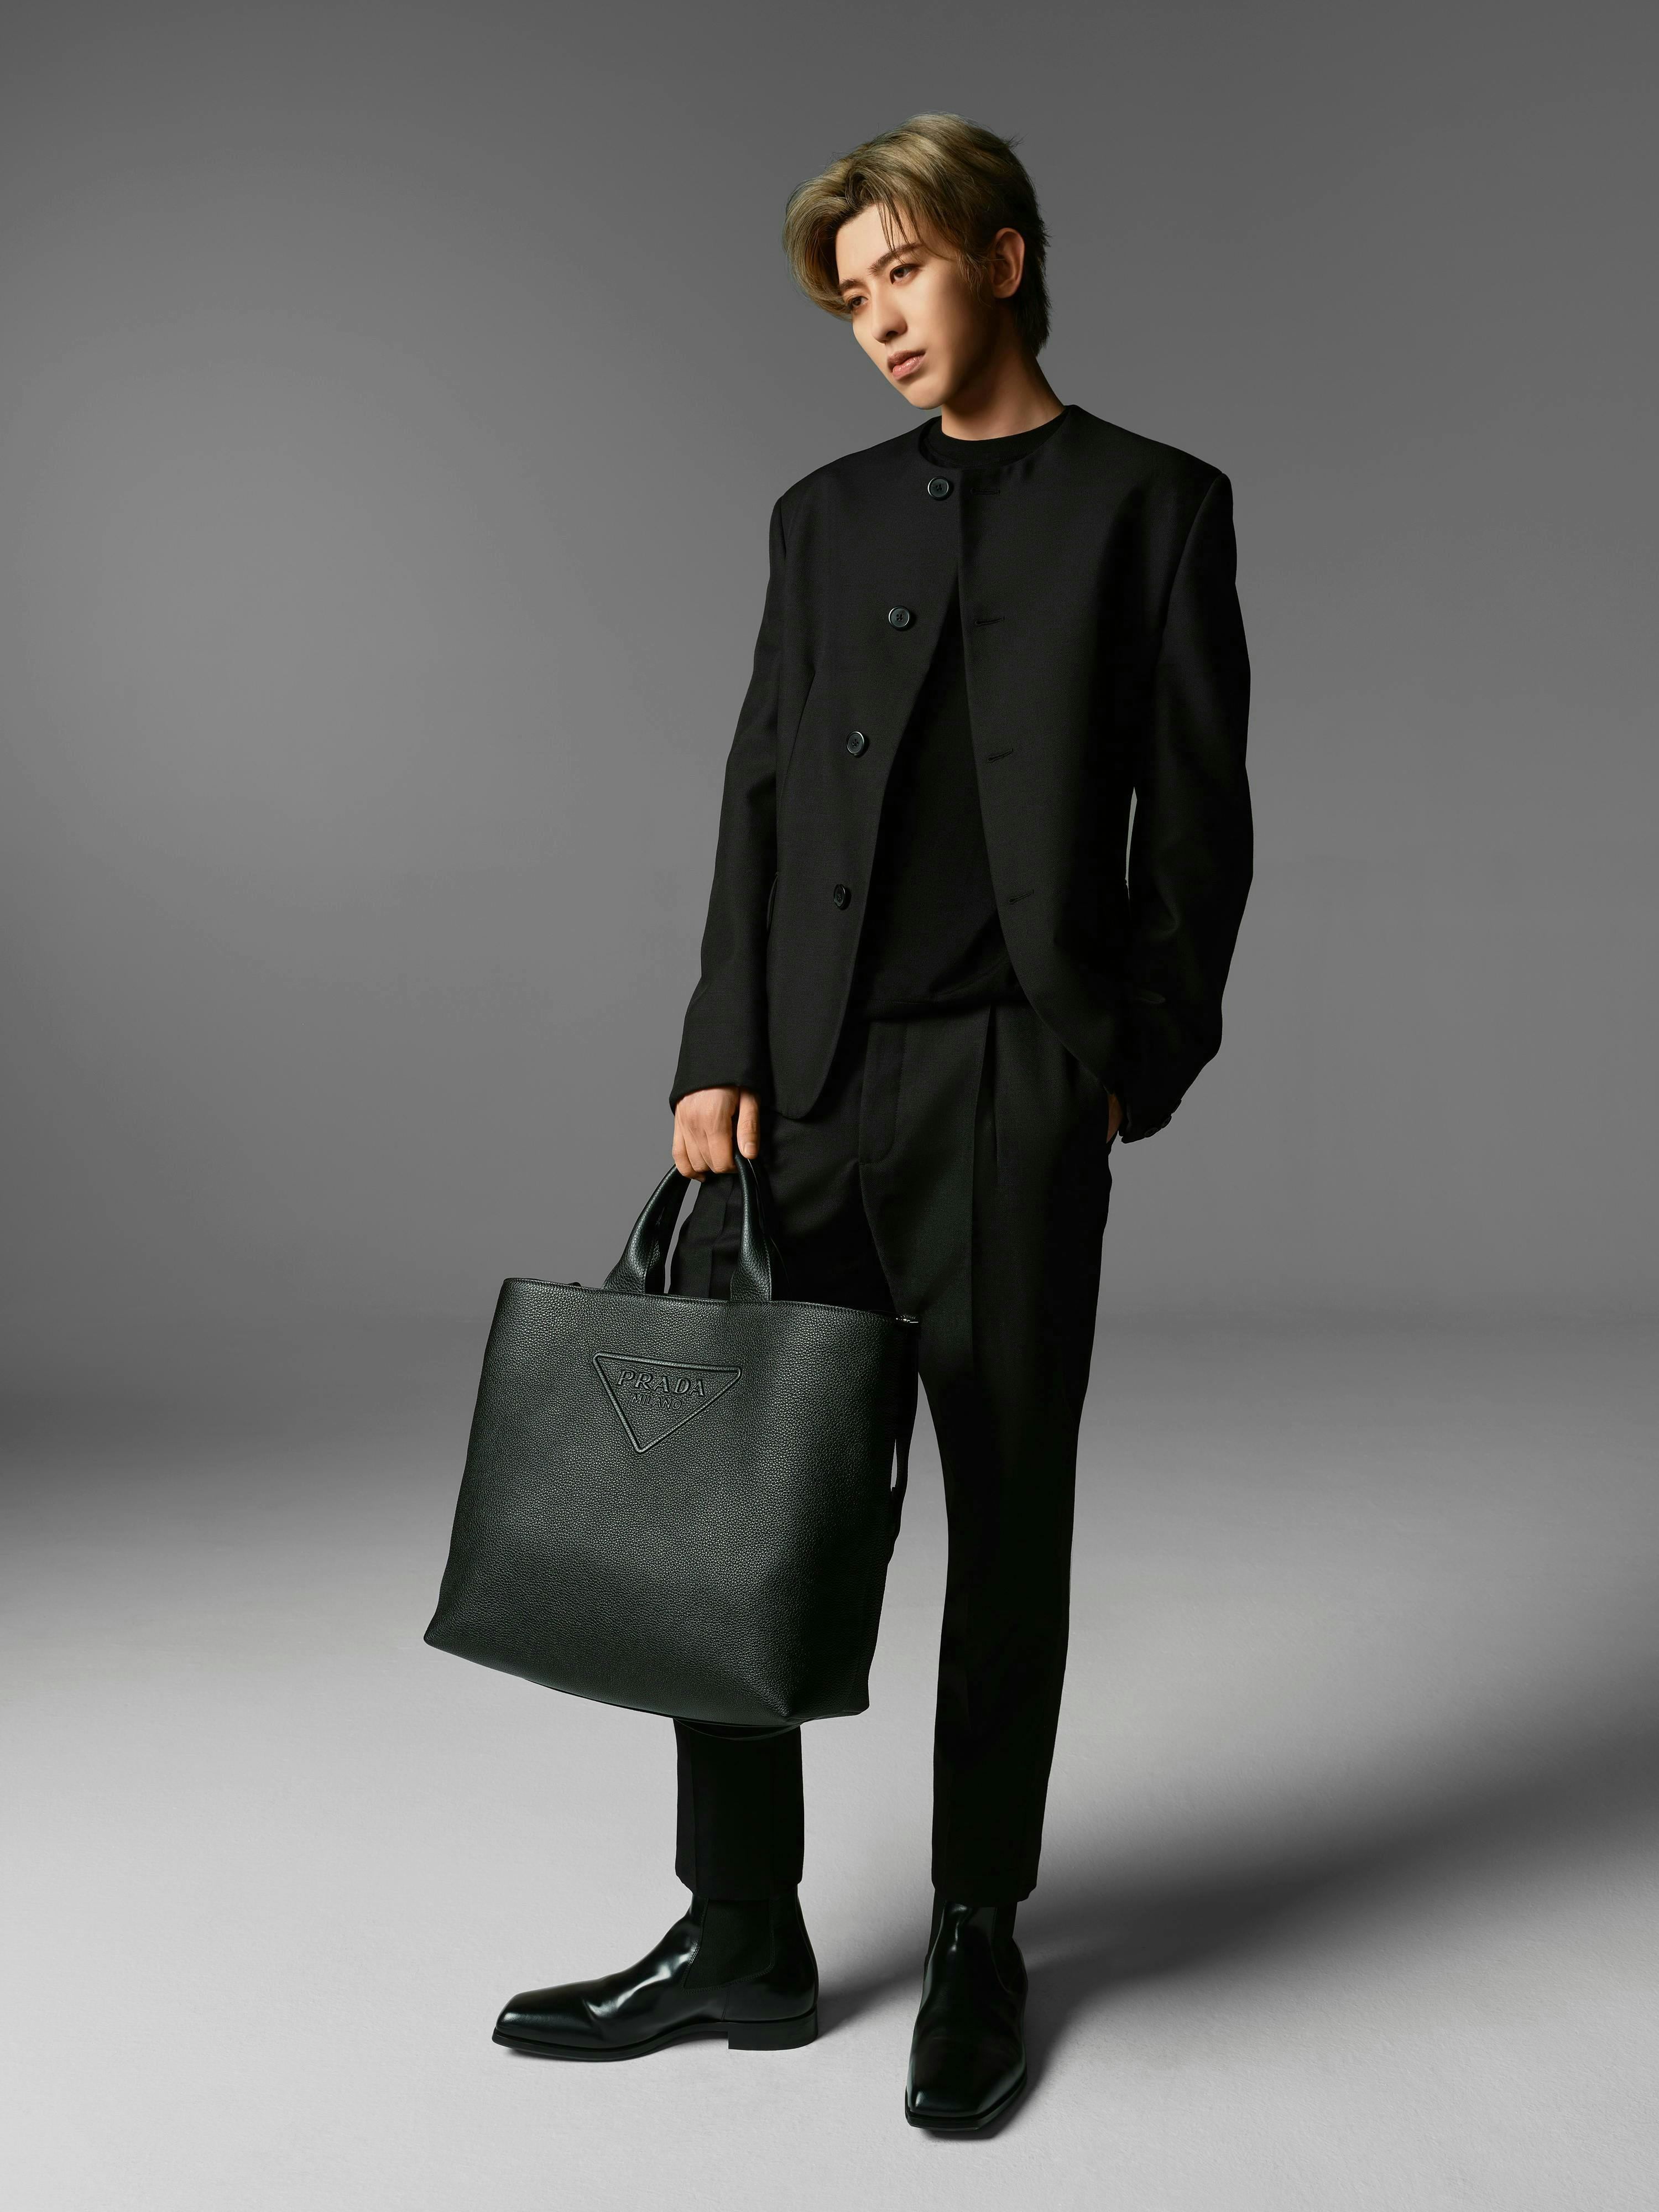 suit formal wear coat bag handbag blazer jacket person man adult